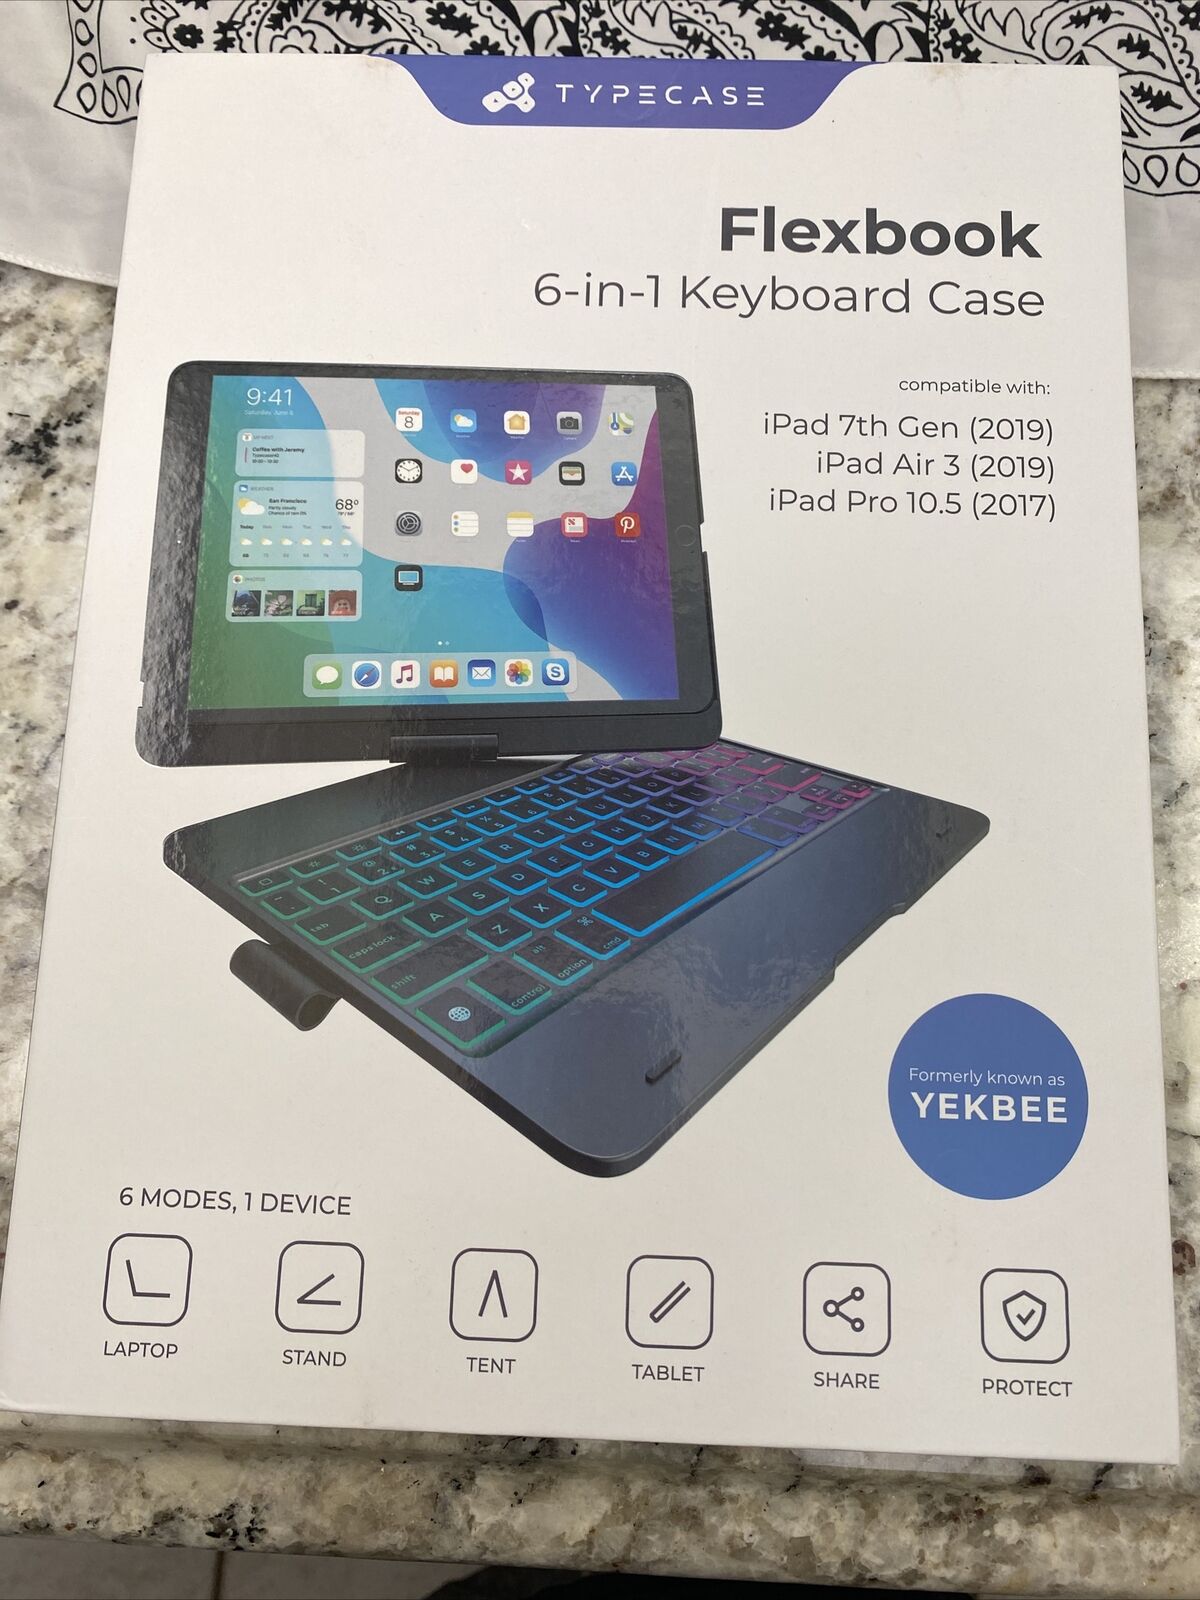 Yekbee Typecase Ipad 7th Gen, Air 3, Pro 10.5 flex book 6-In-1 Keyboard Blk